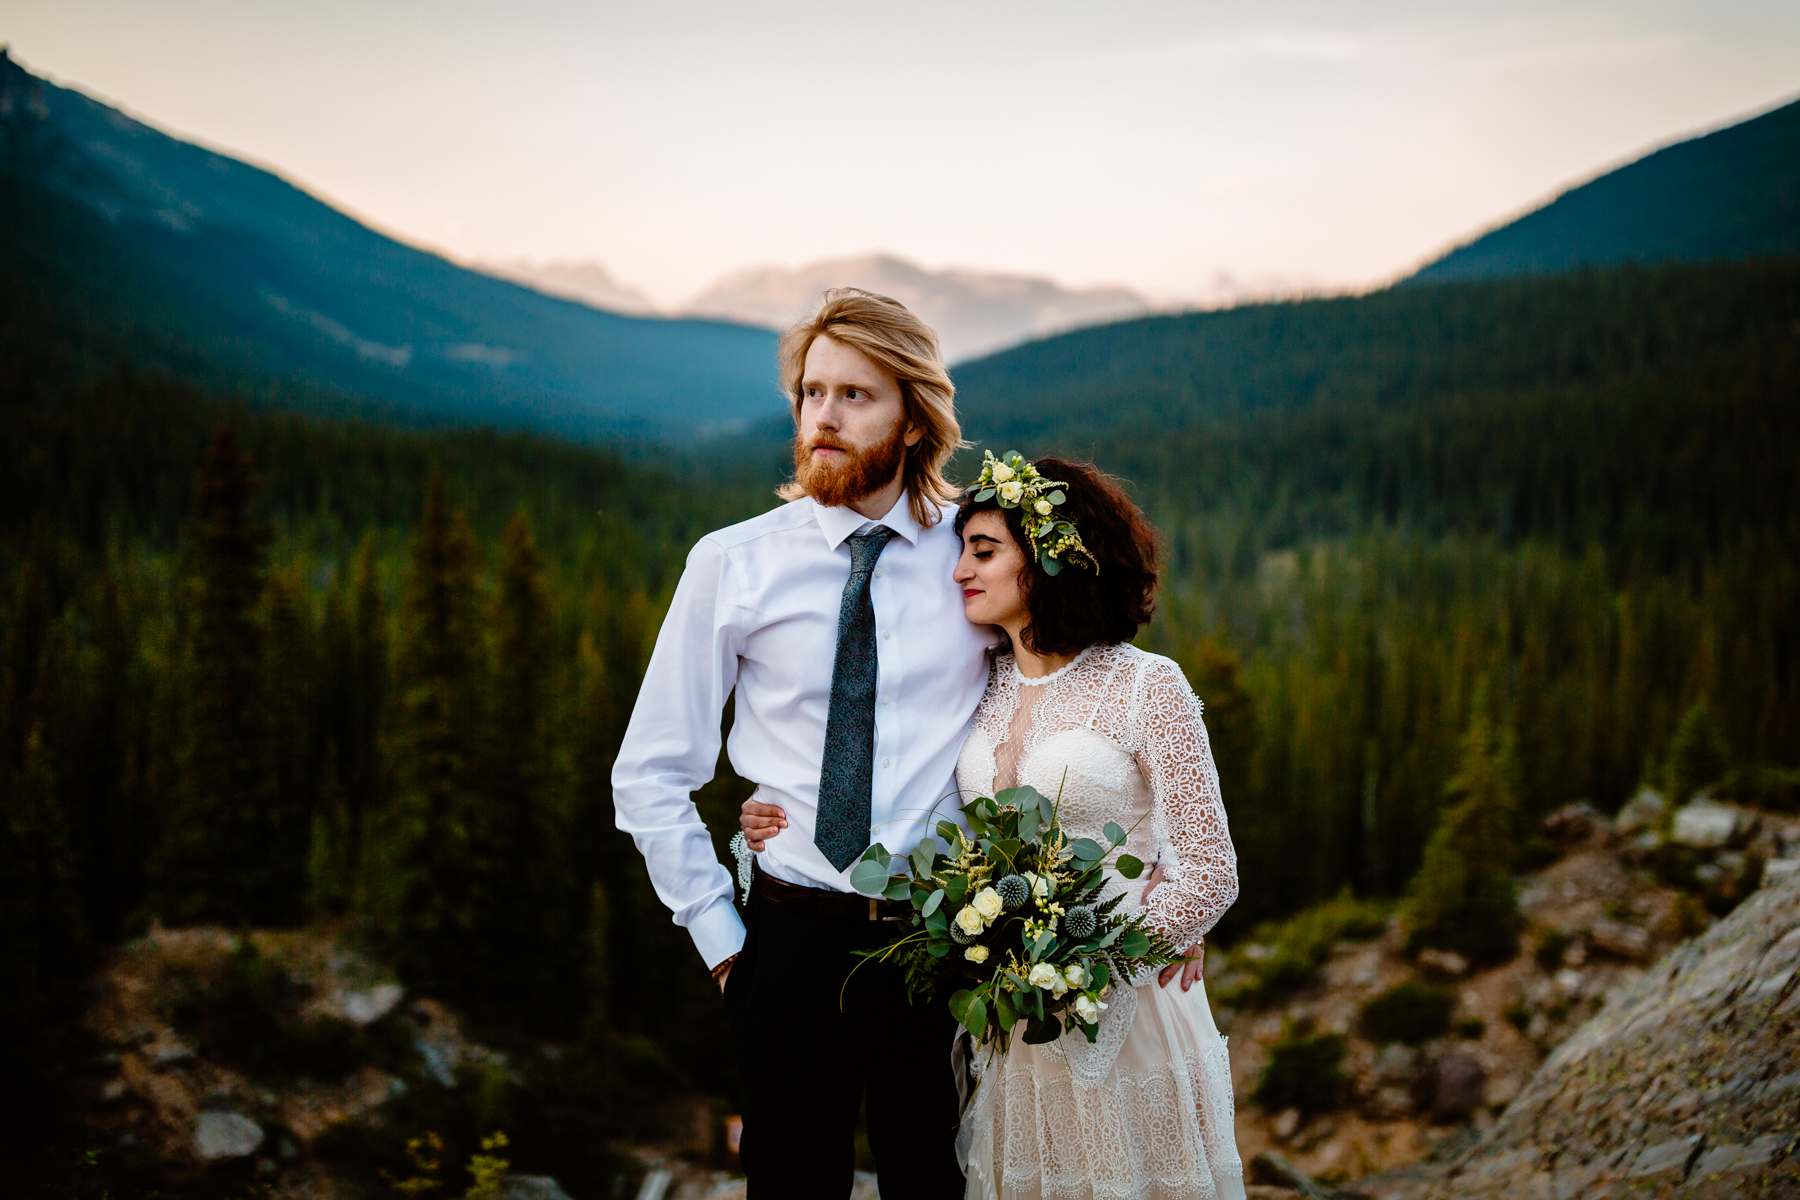 Banff Photographers at a Moraine Lake Post-Wedding Adventure Session - Photo 24